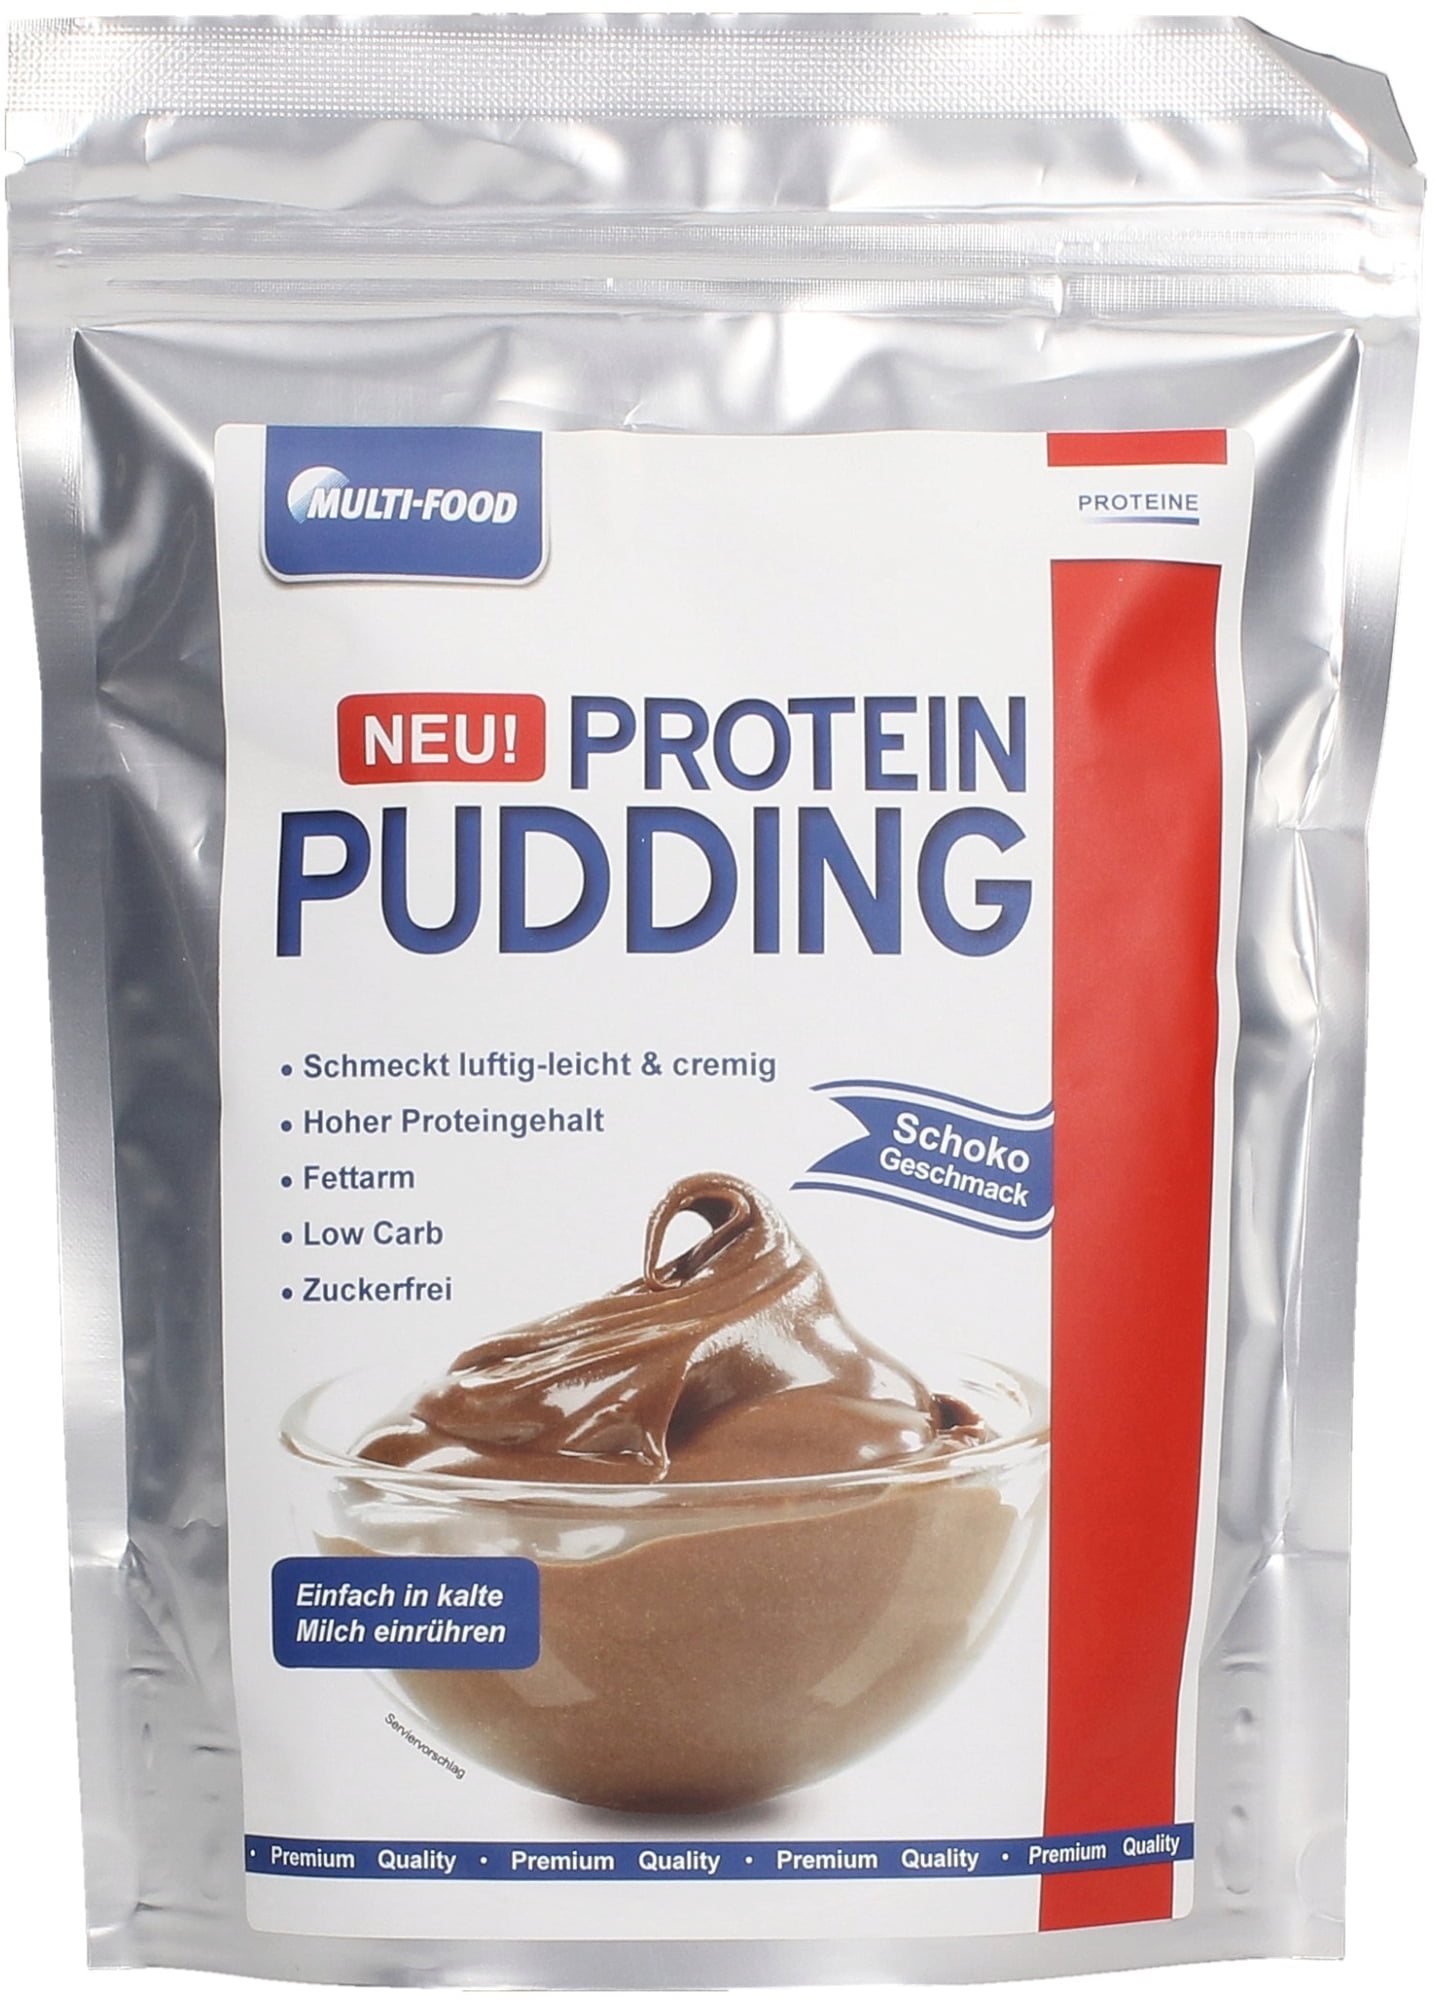 Multi-Food Protein Pudding - Schoko